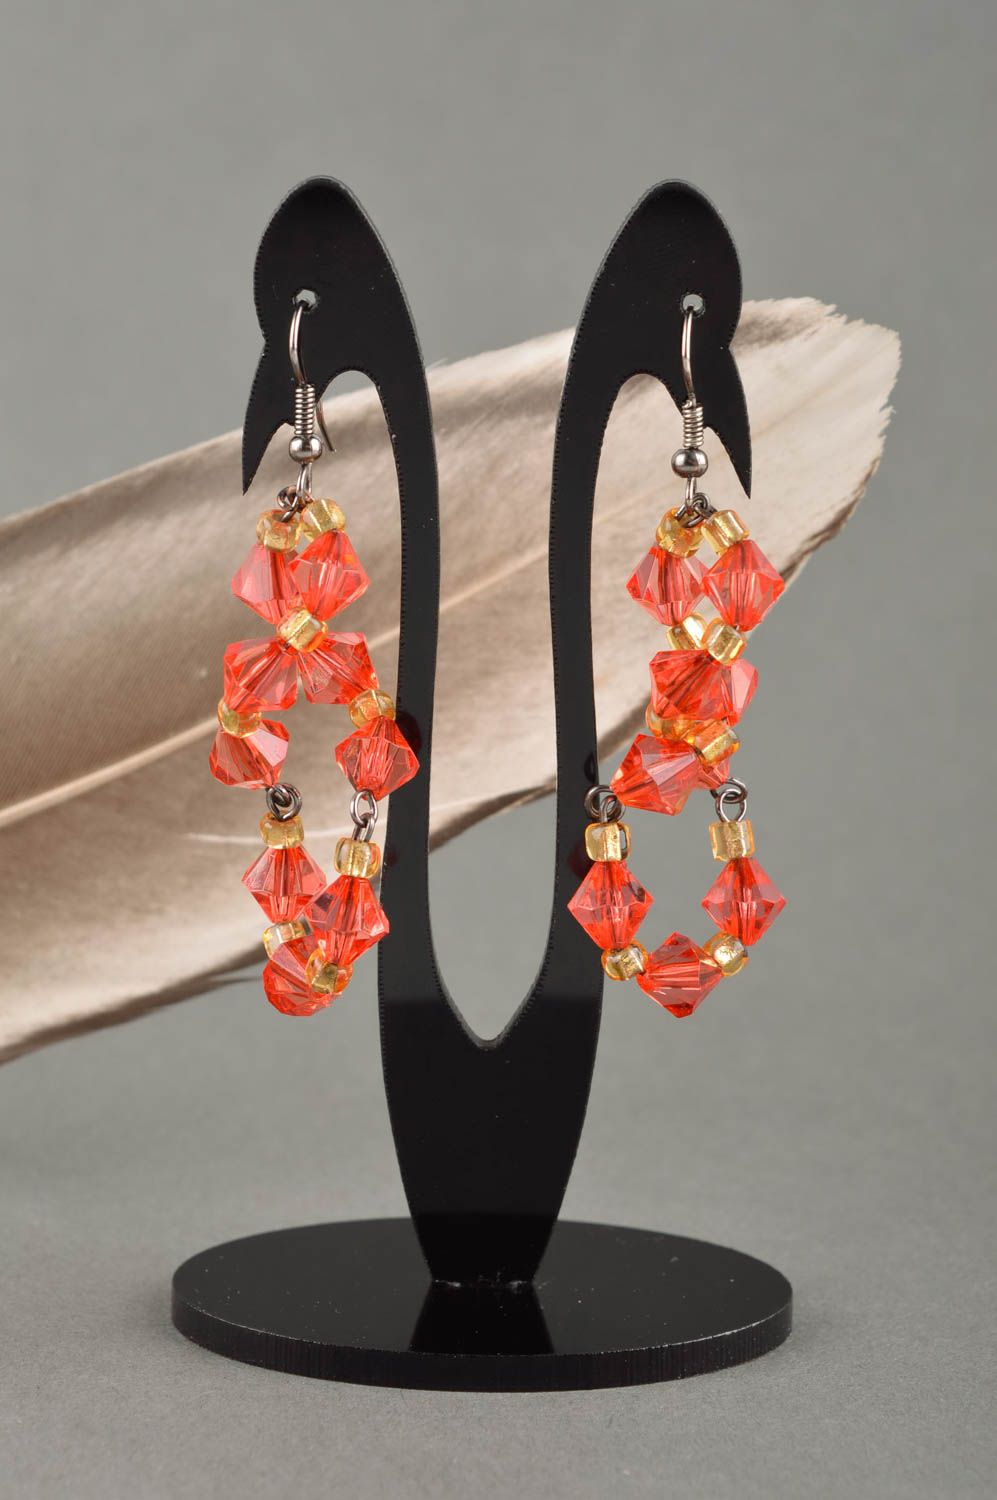 Handmade earrings designer accessories for women ladies earrings gifts for girls photo 1